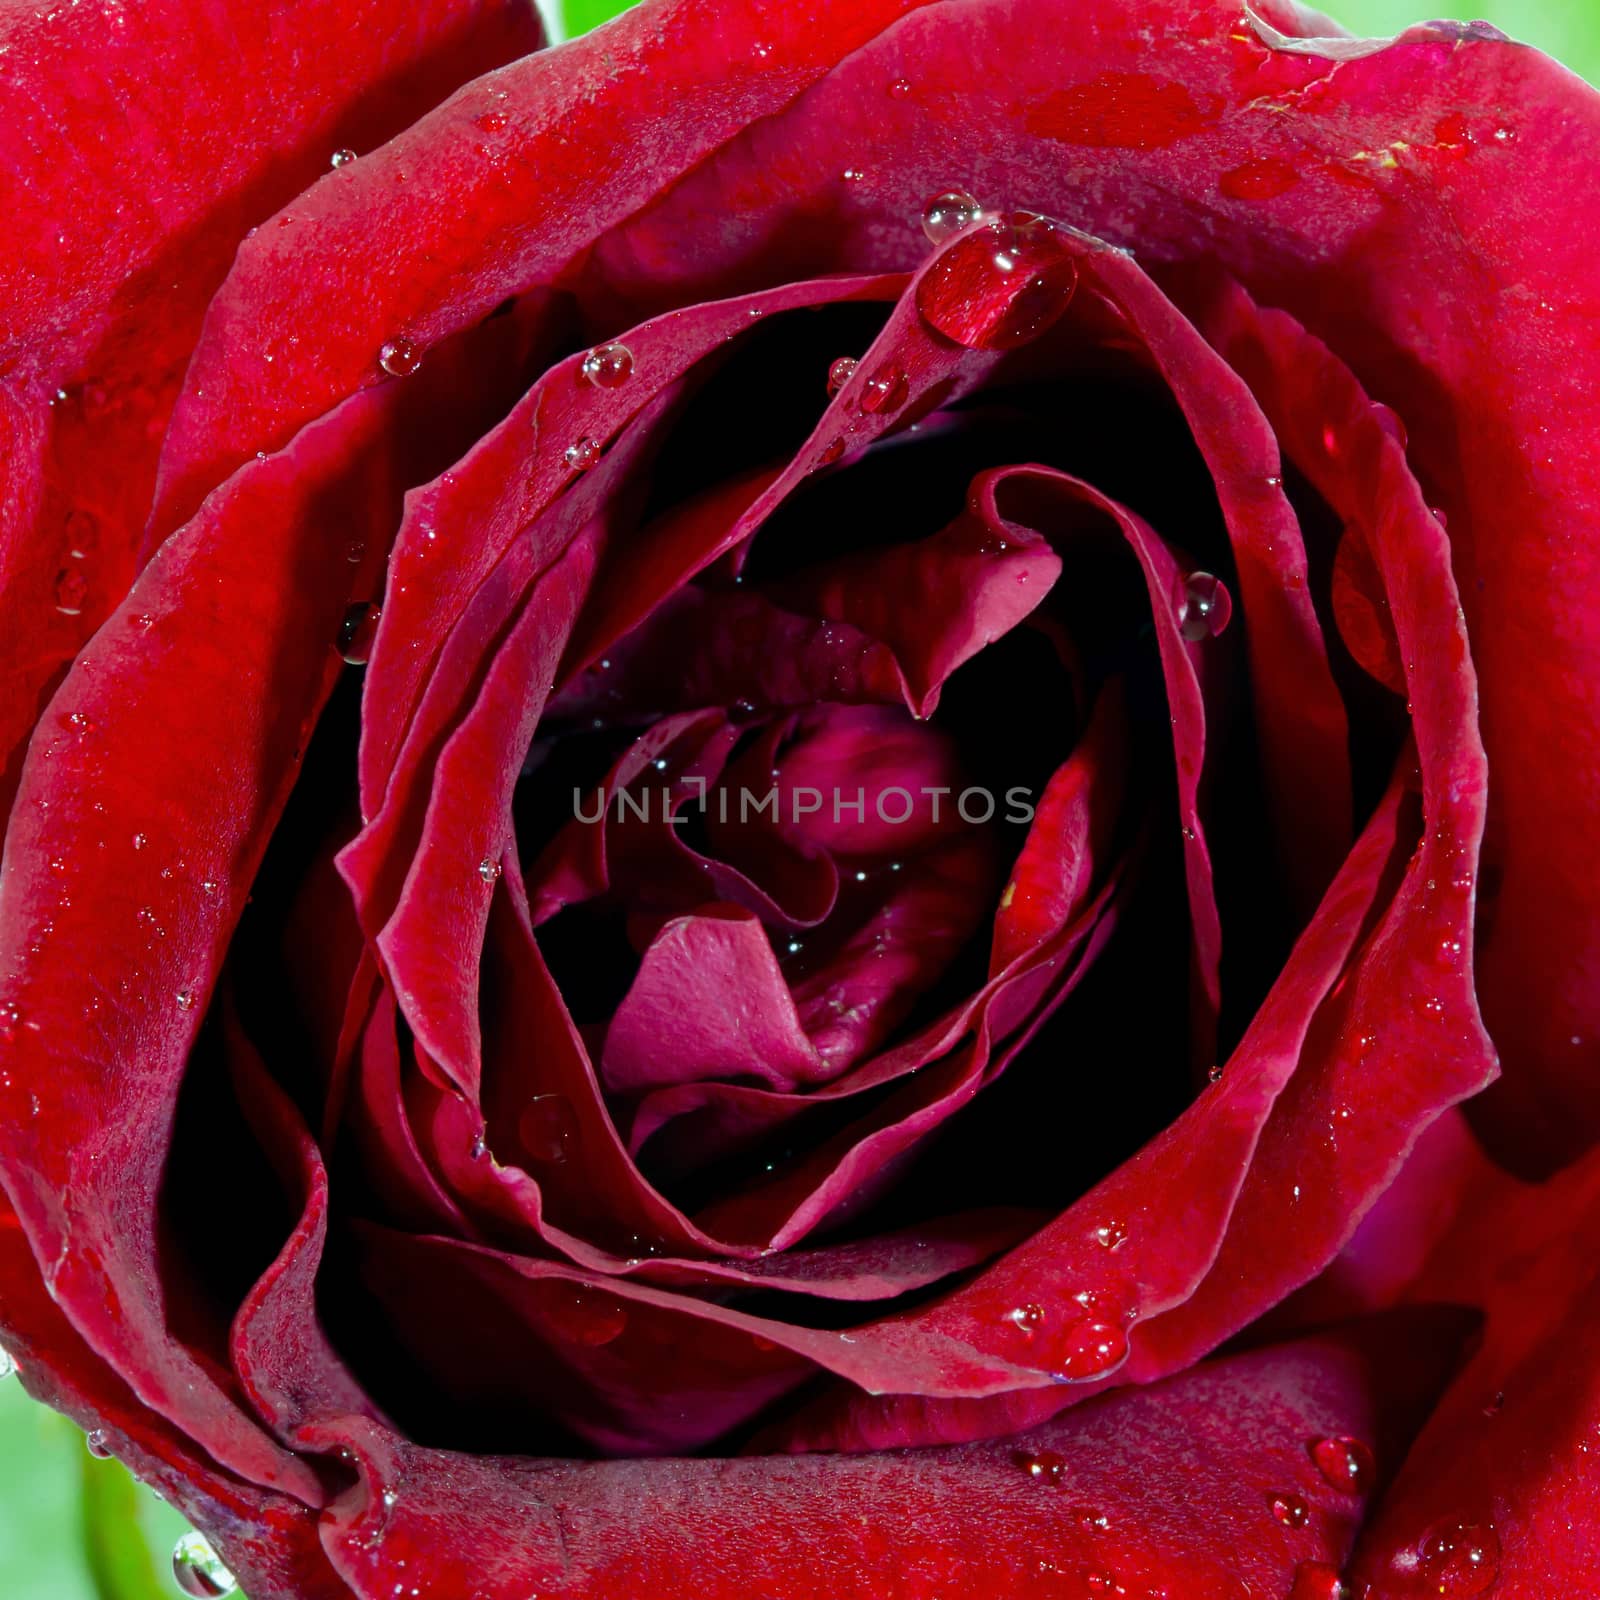 Close-up view of beatiful dark red rose